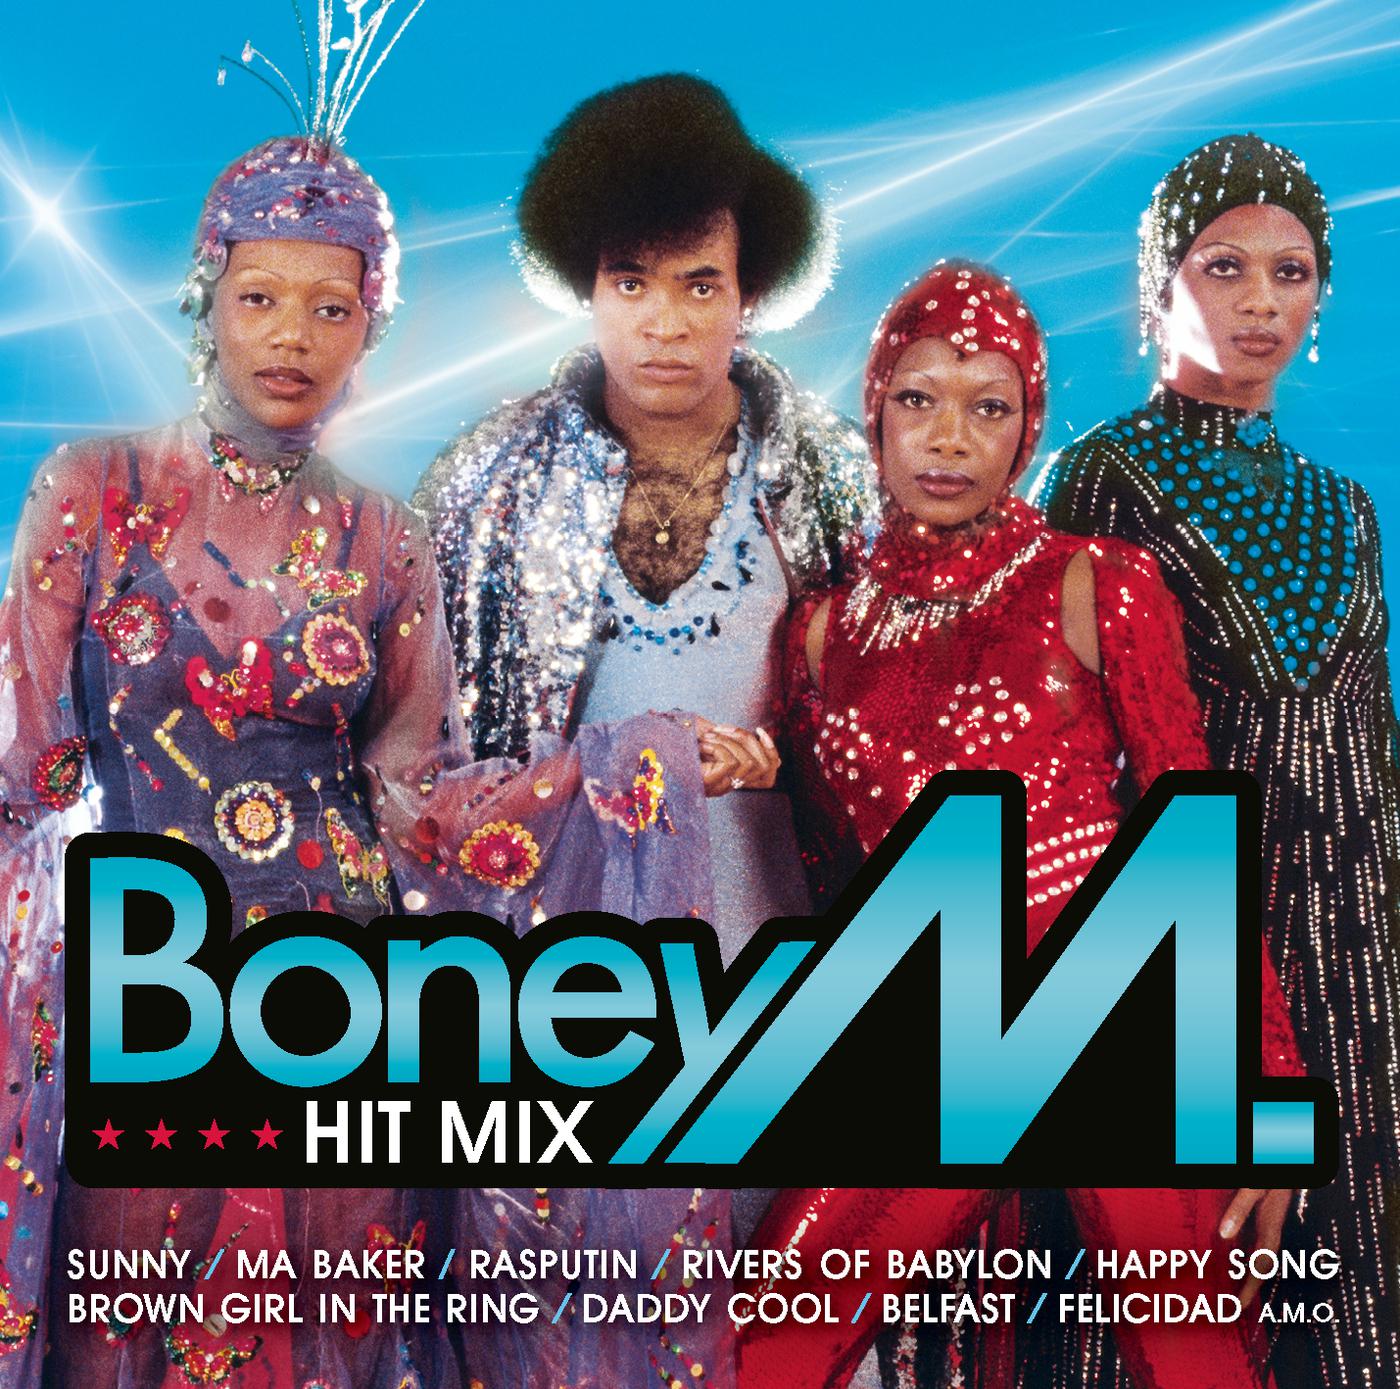 Группа бони м песни. Группа Бони м. Группа Boney m. в 80. Состав группы Бони м 1977. Boney m обложка.